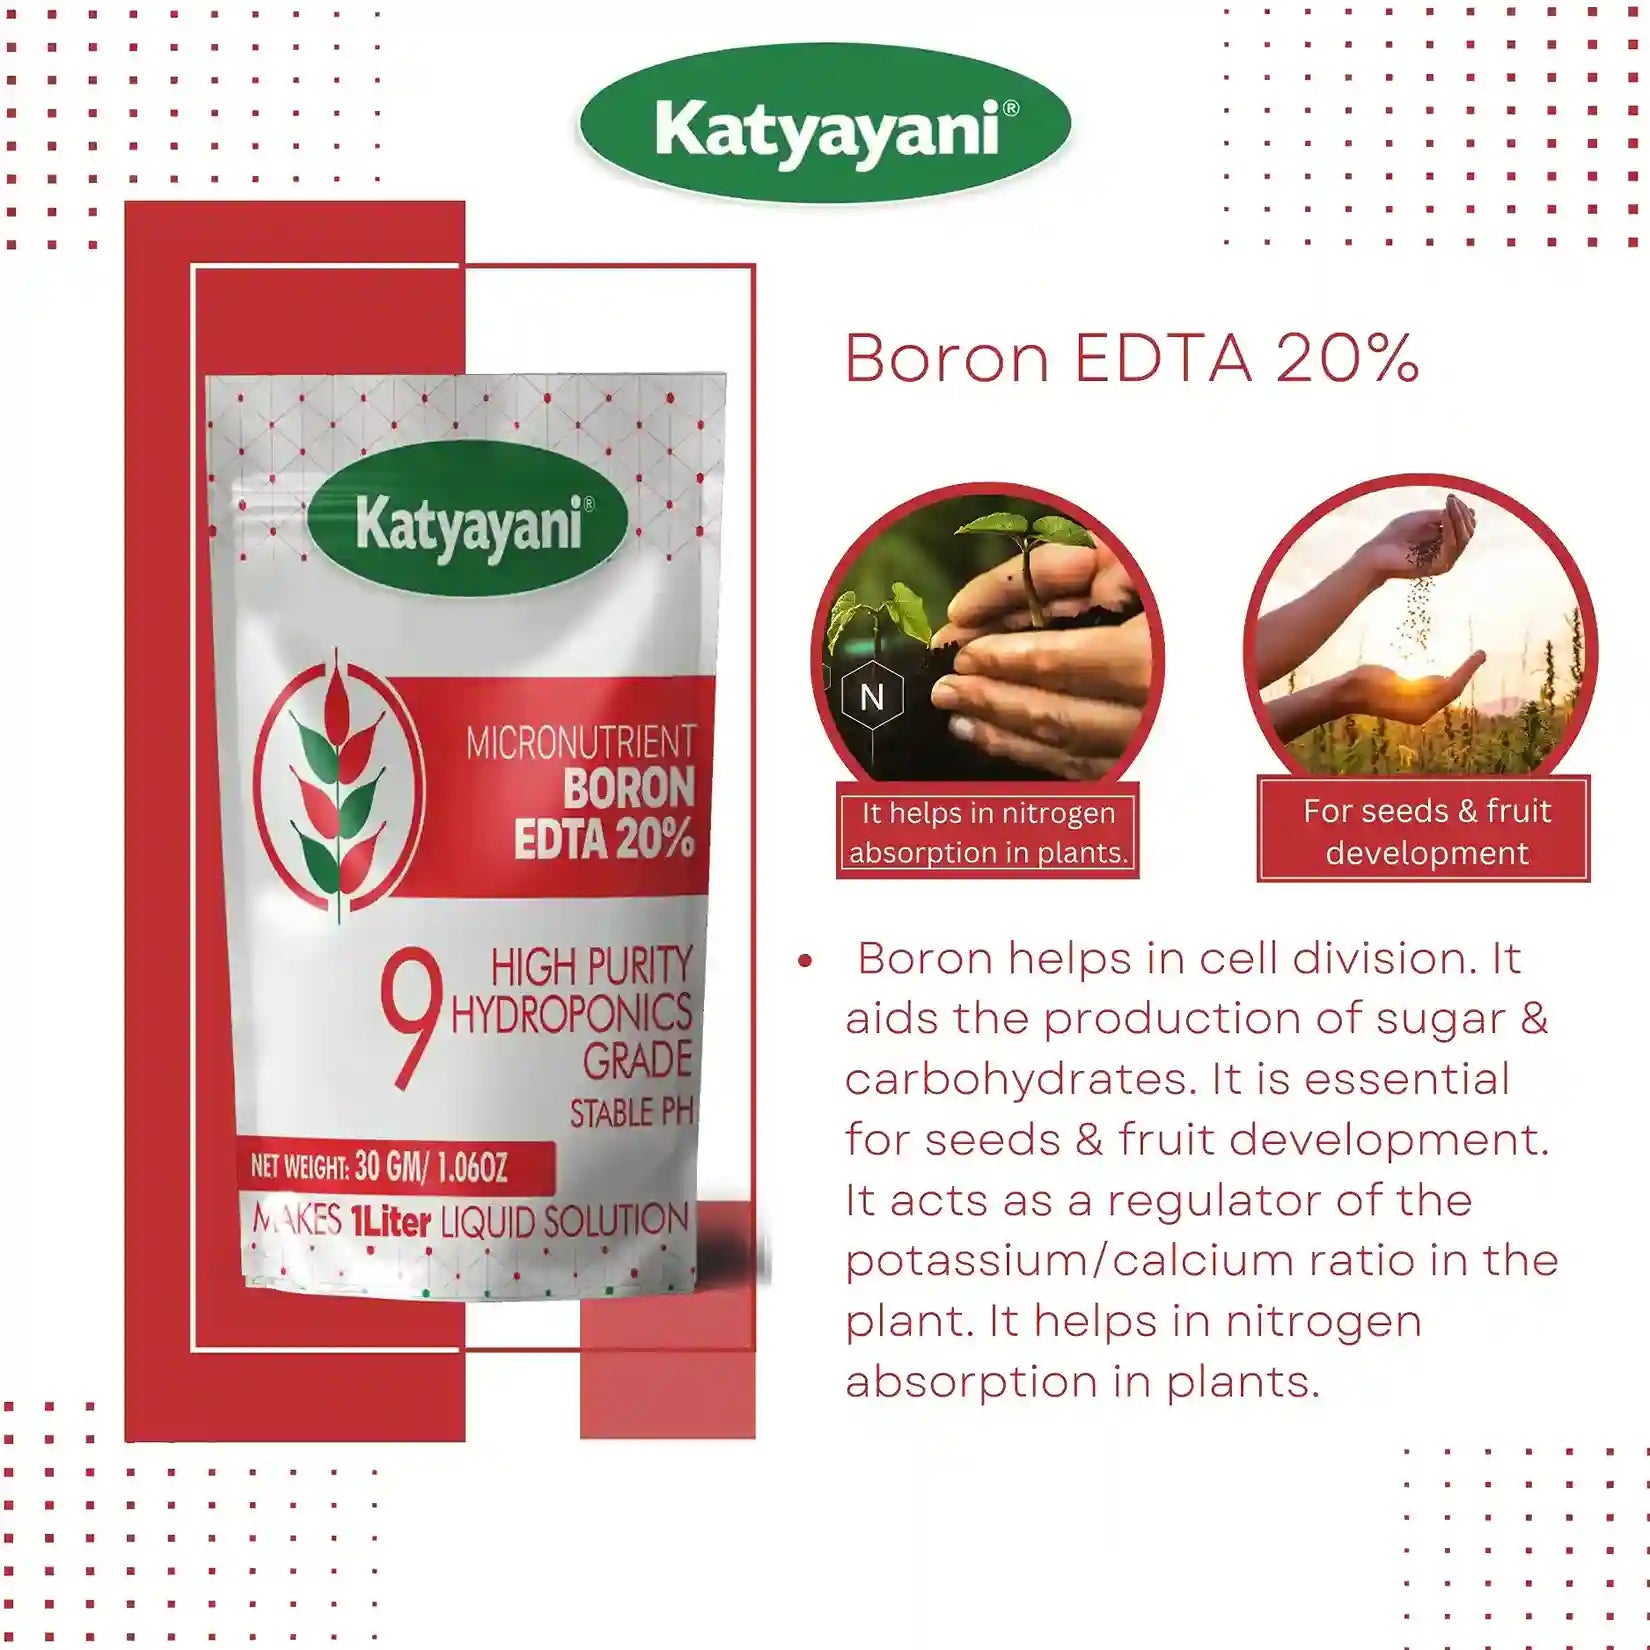 katyayani Boron 20% EDTA-Fertilizer for seed and fruit development